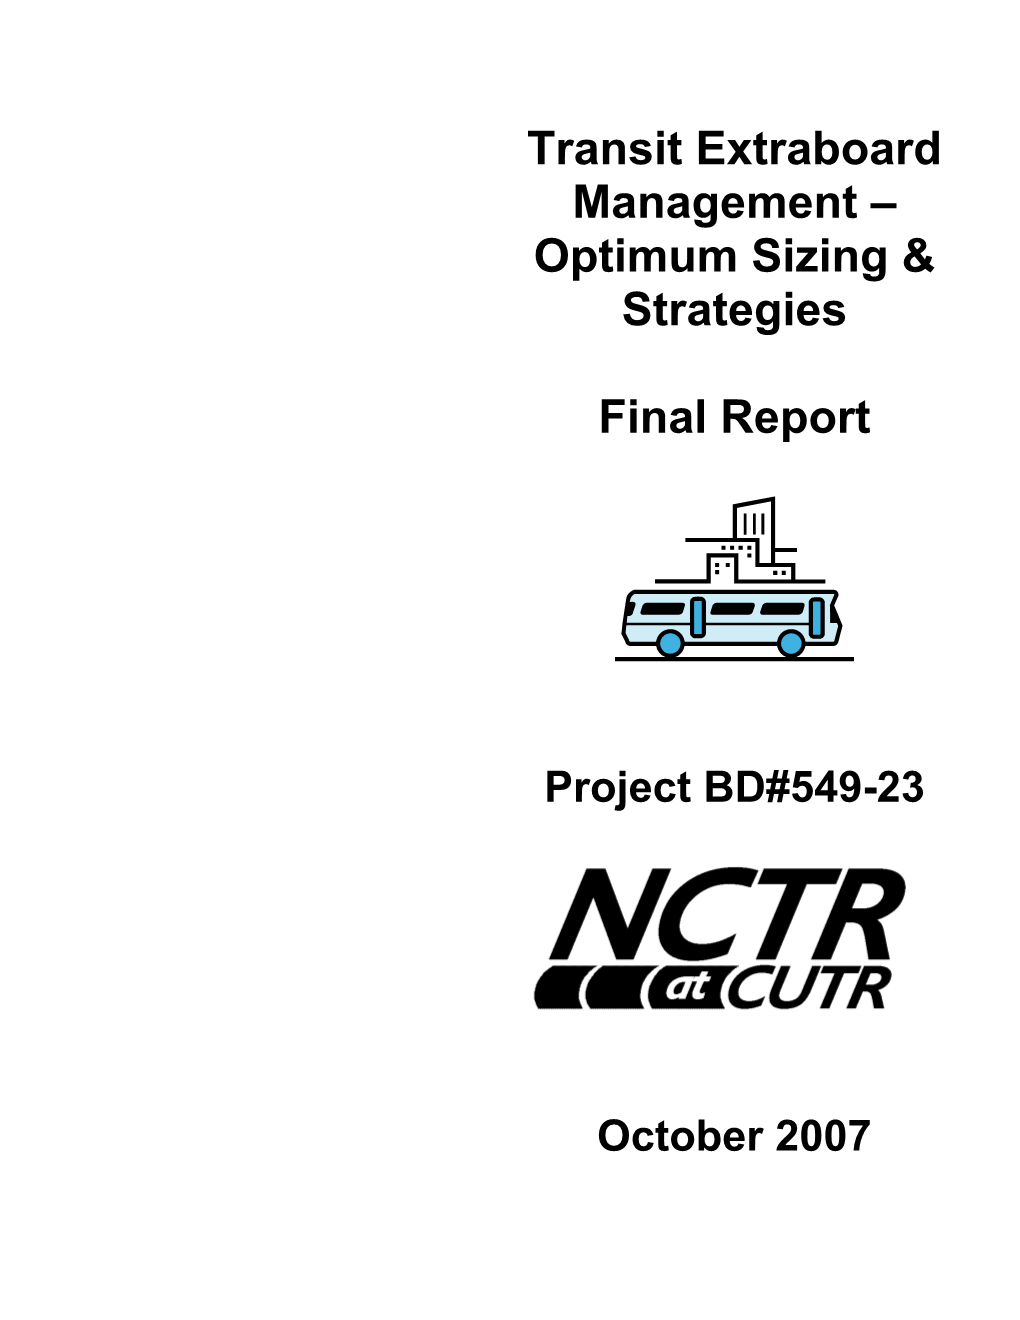 Transit Extraboard Management – Optimum Sizing & Strategies Final